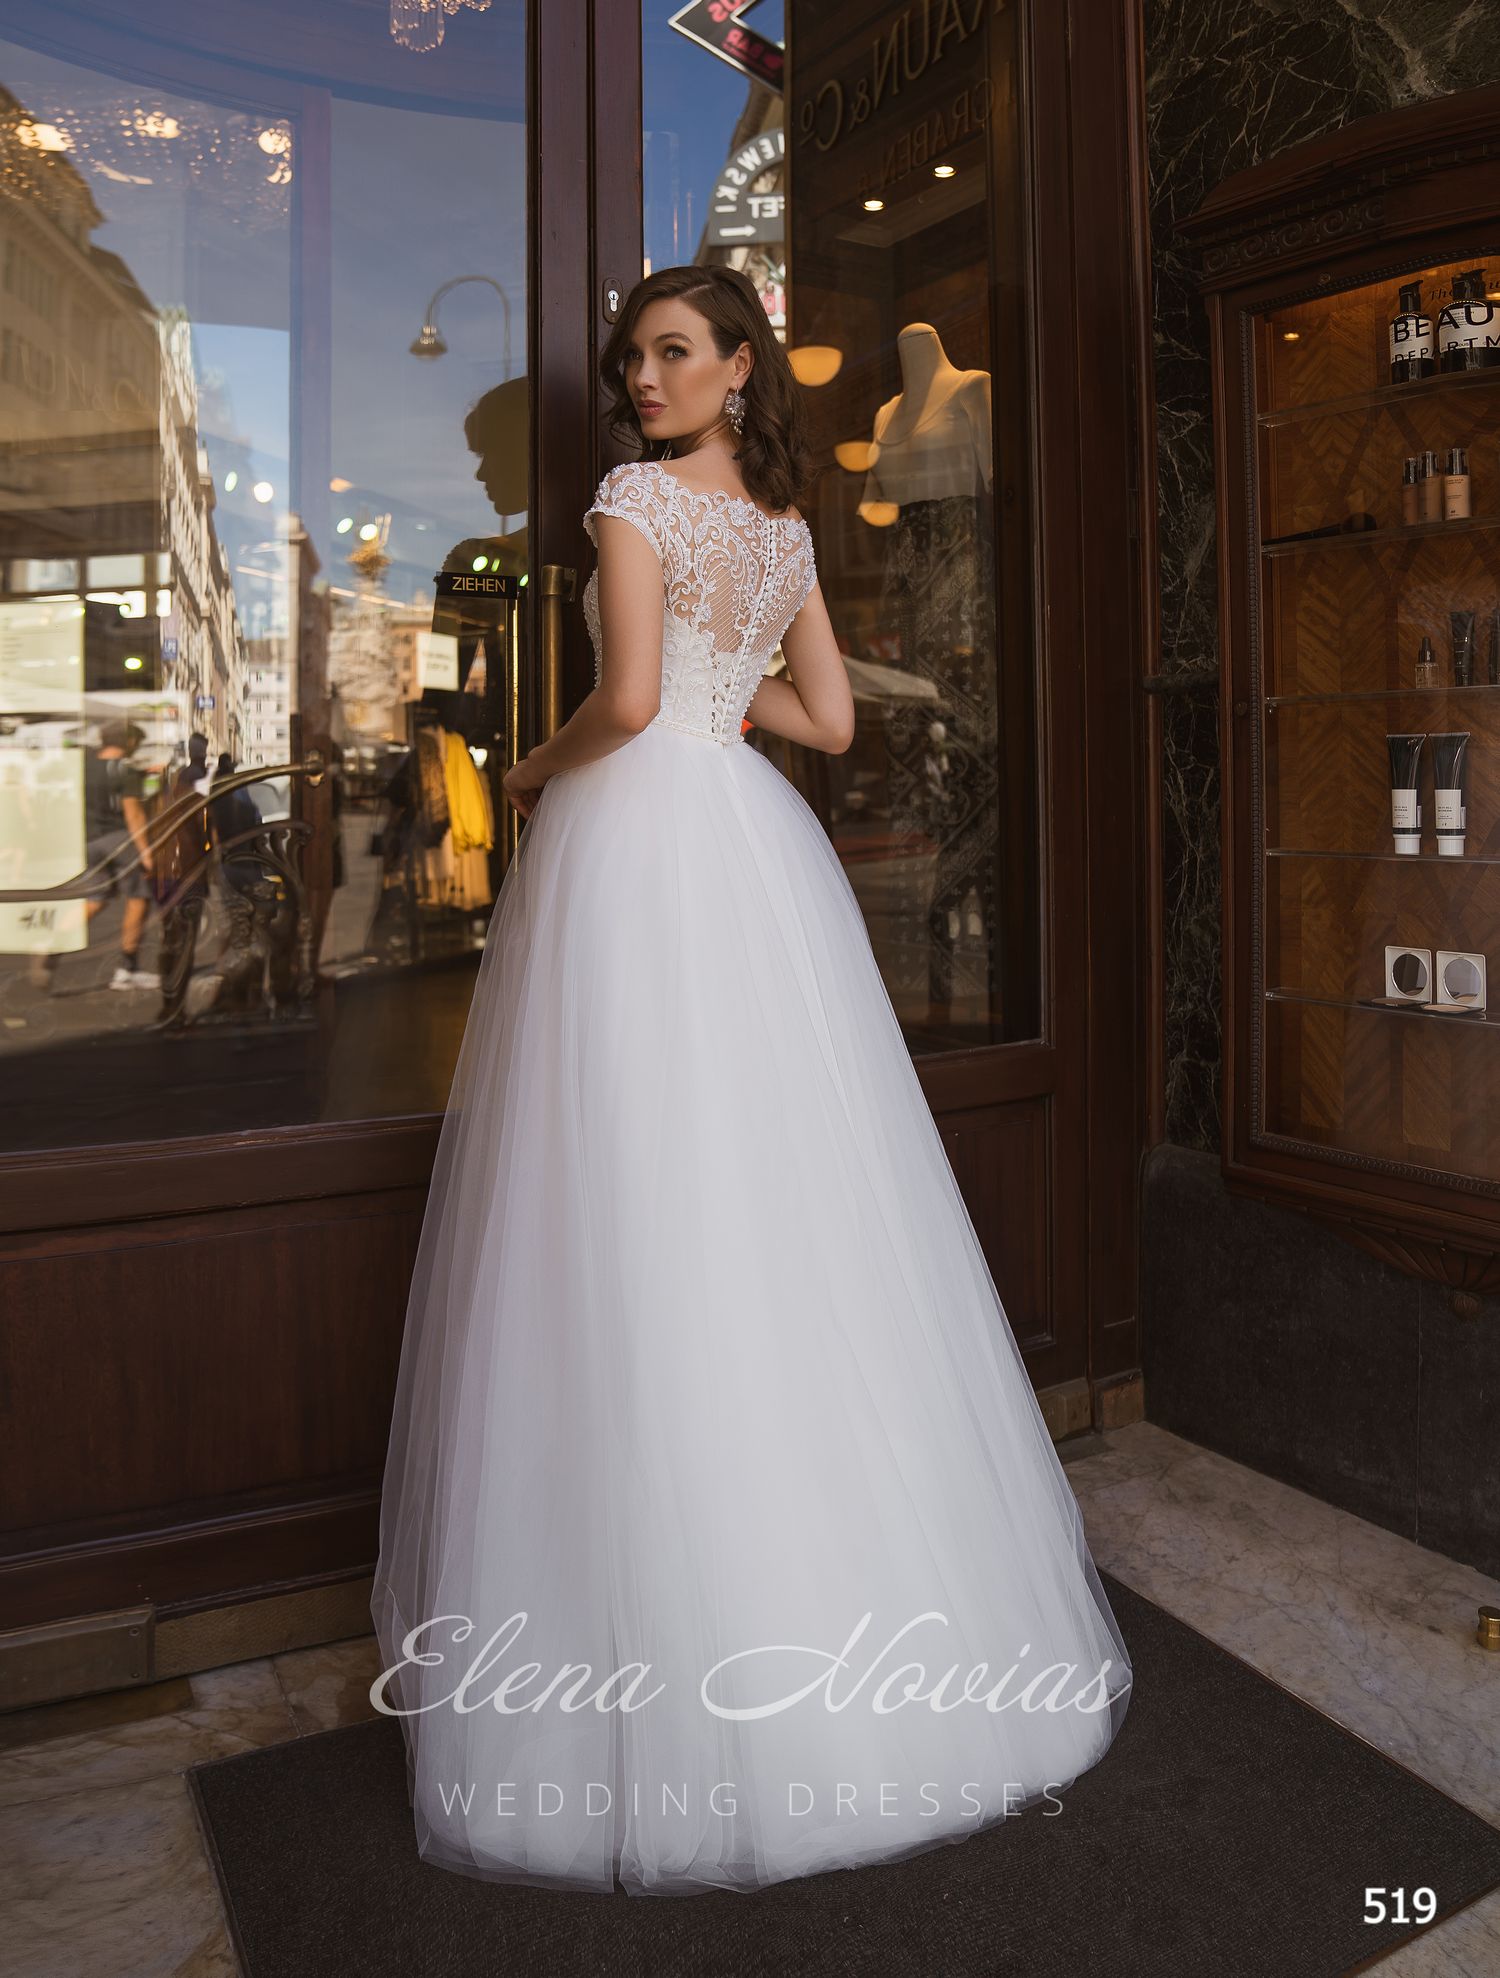 Wedding dresses 519 2